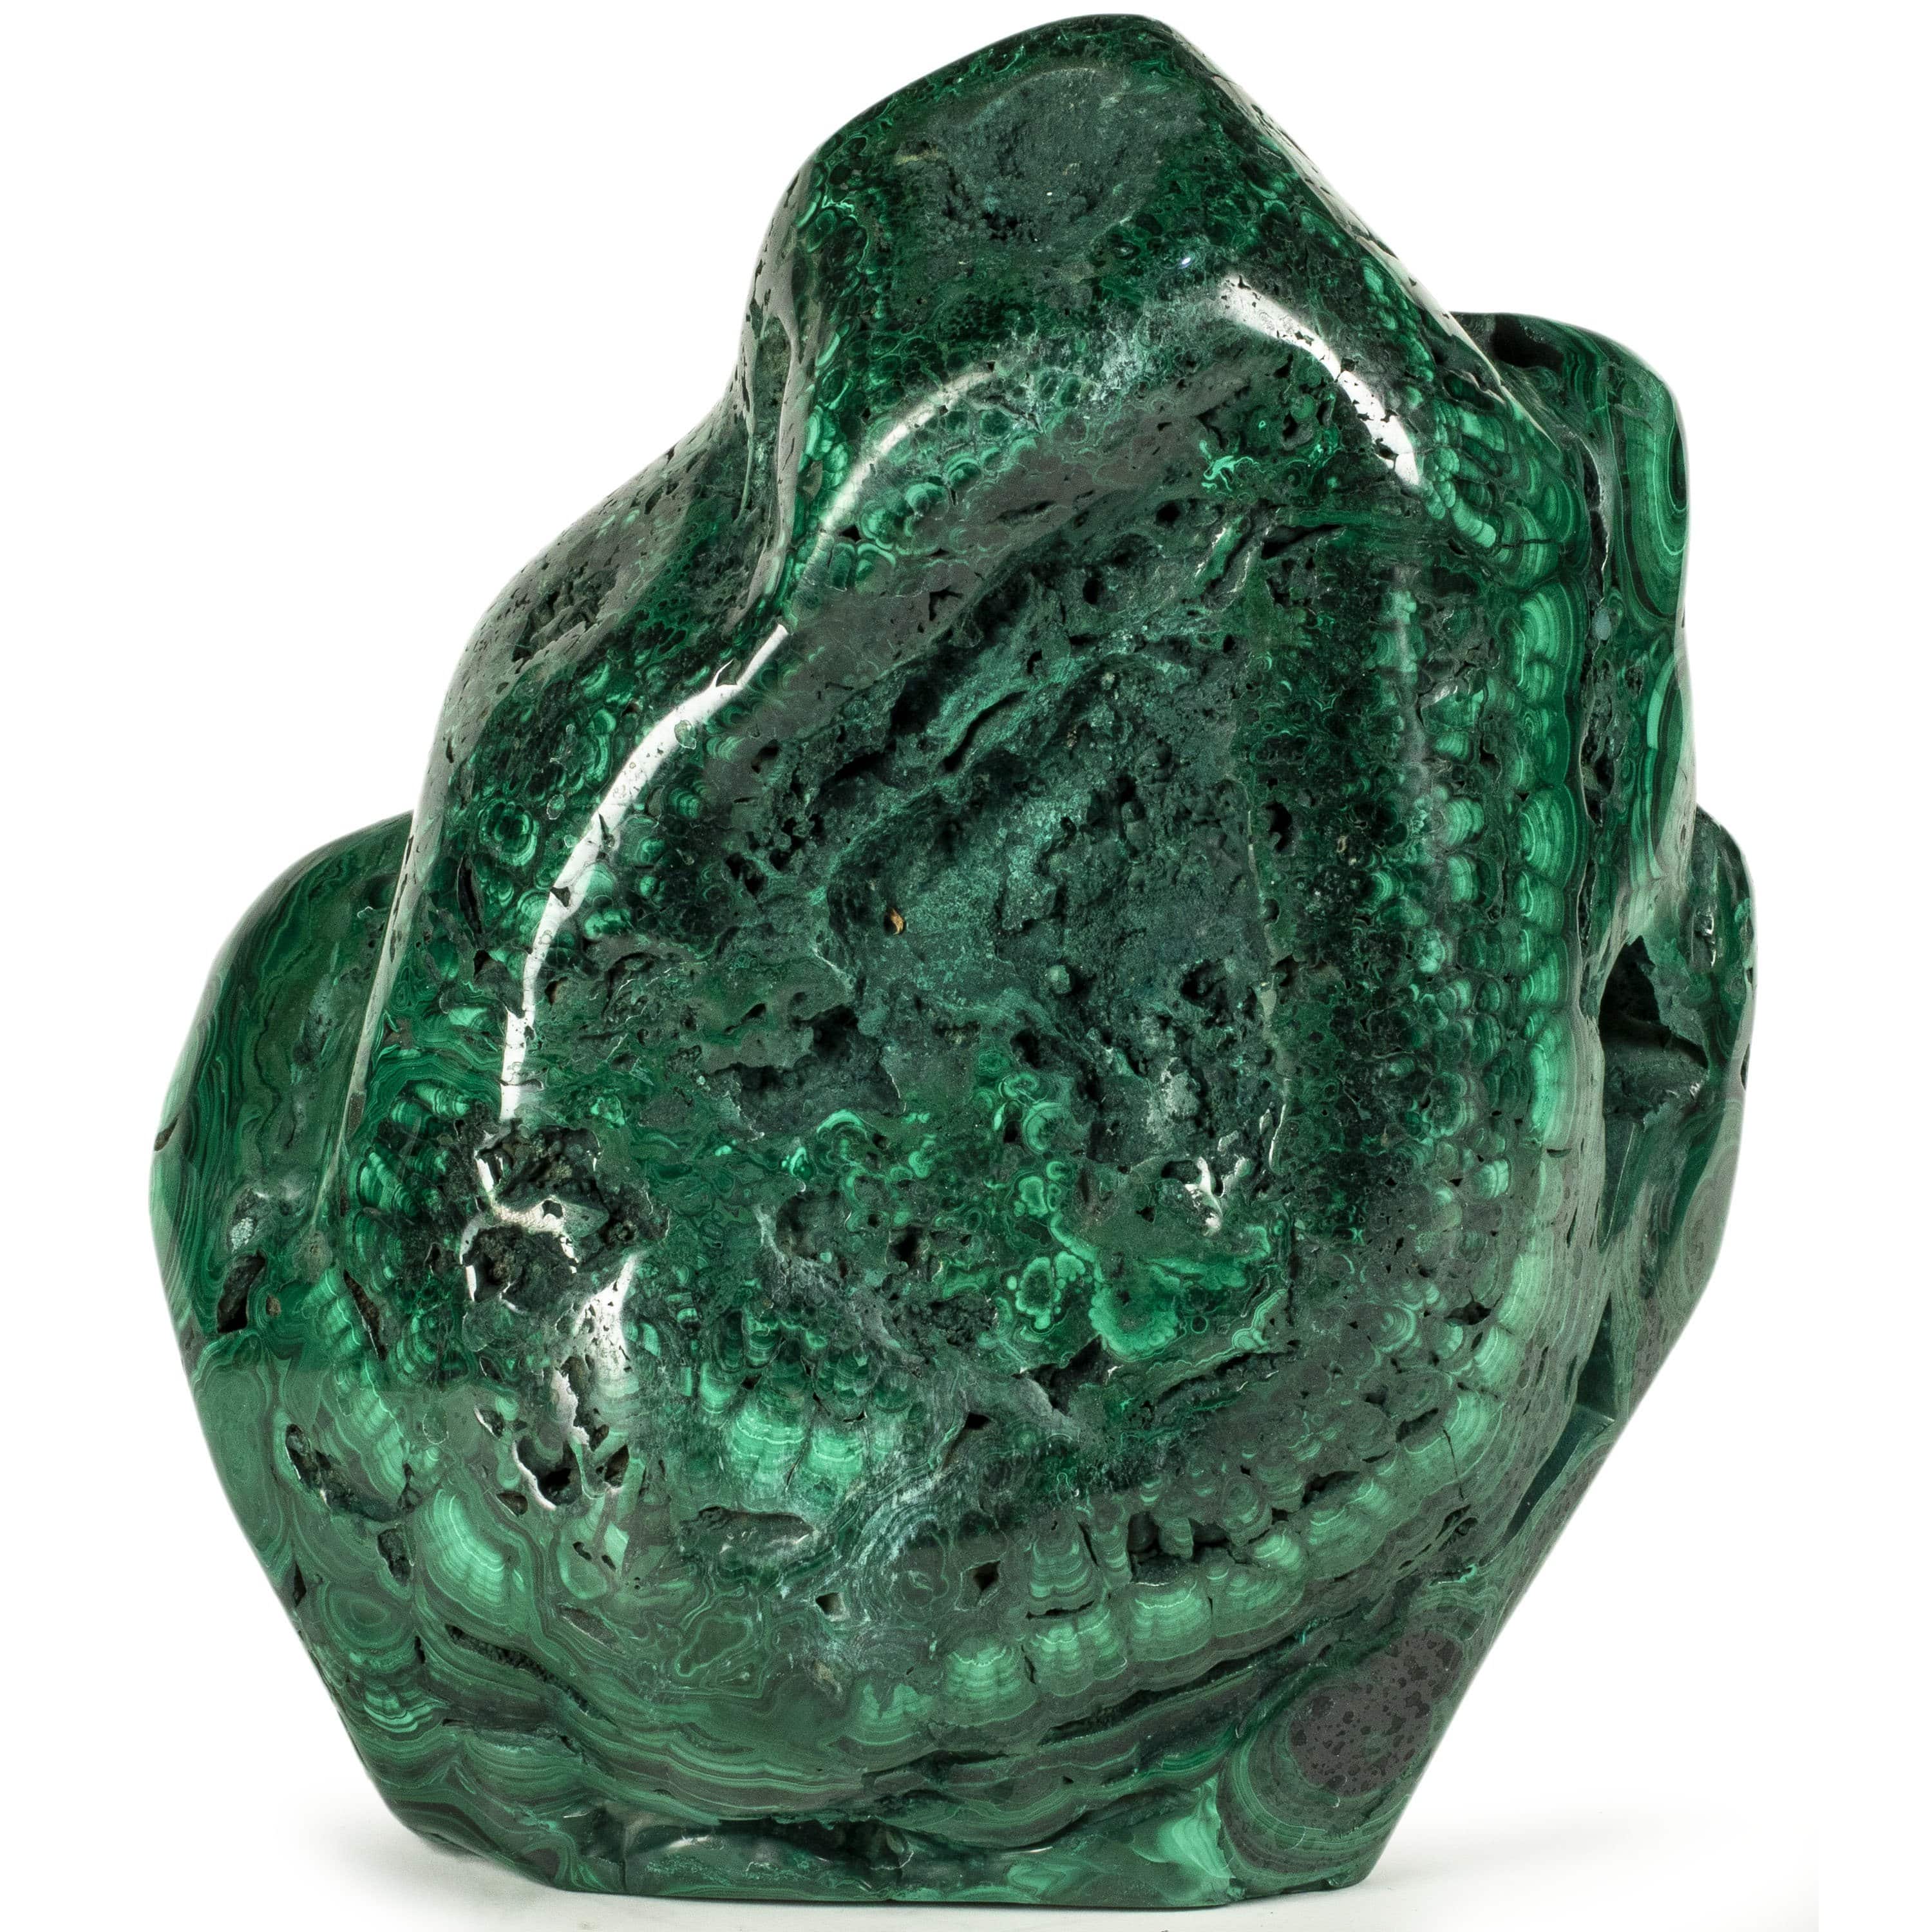 Kalifano Malachite Rare Natural Green Malachite Polished Freeform Specimen from Congo - 21.7 kg / 47.7 lbs MA13600.001